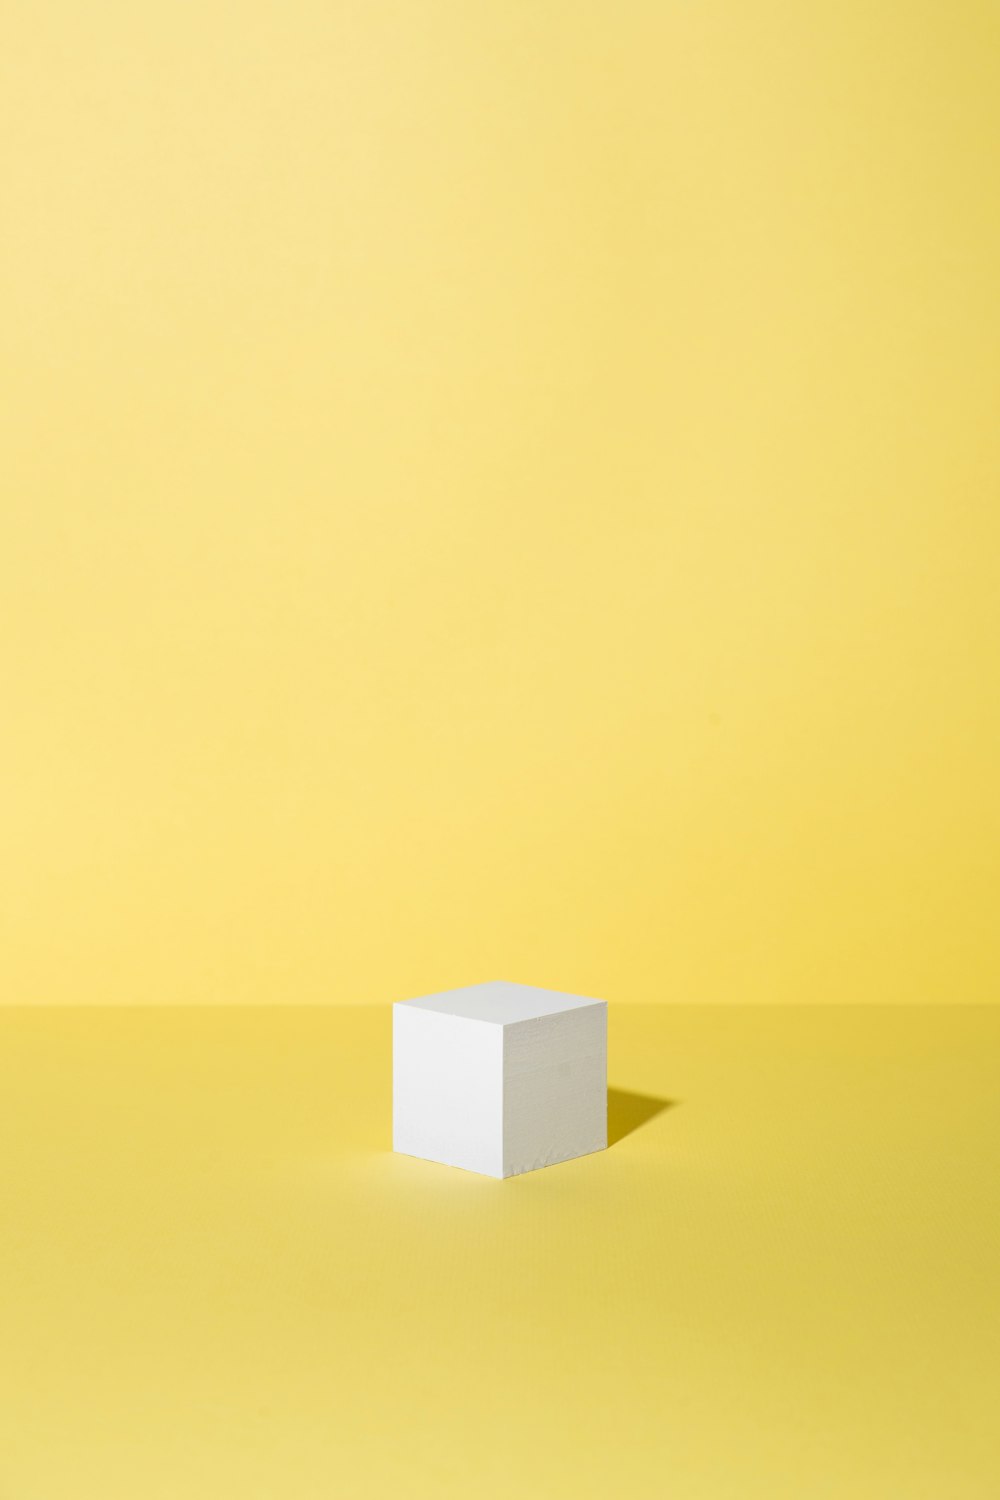 white box on yellow background